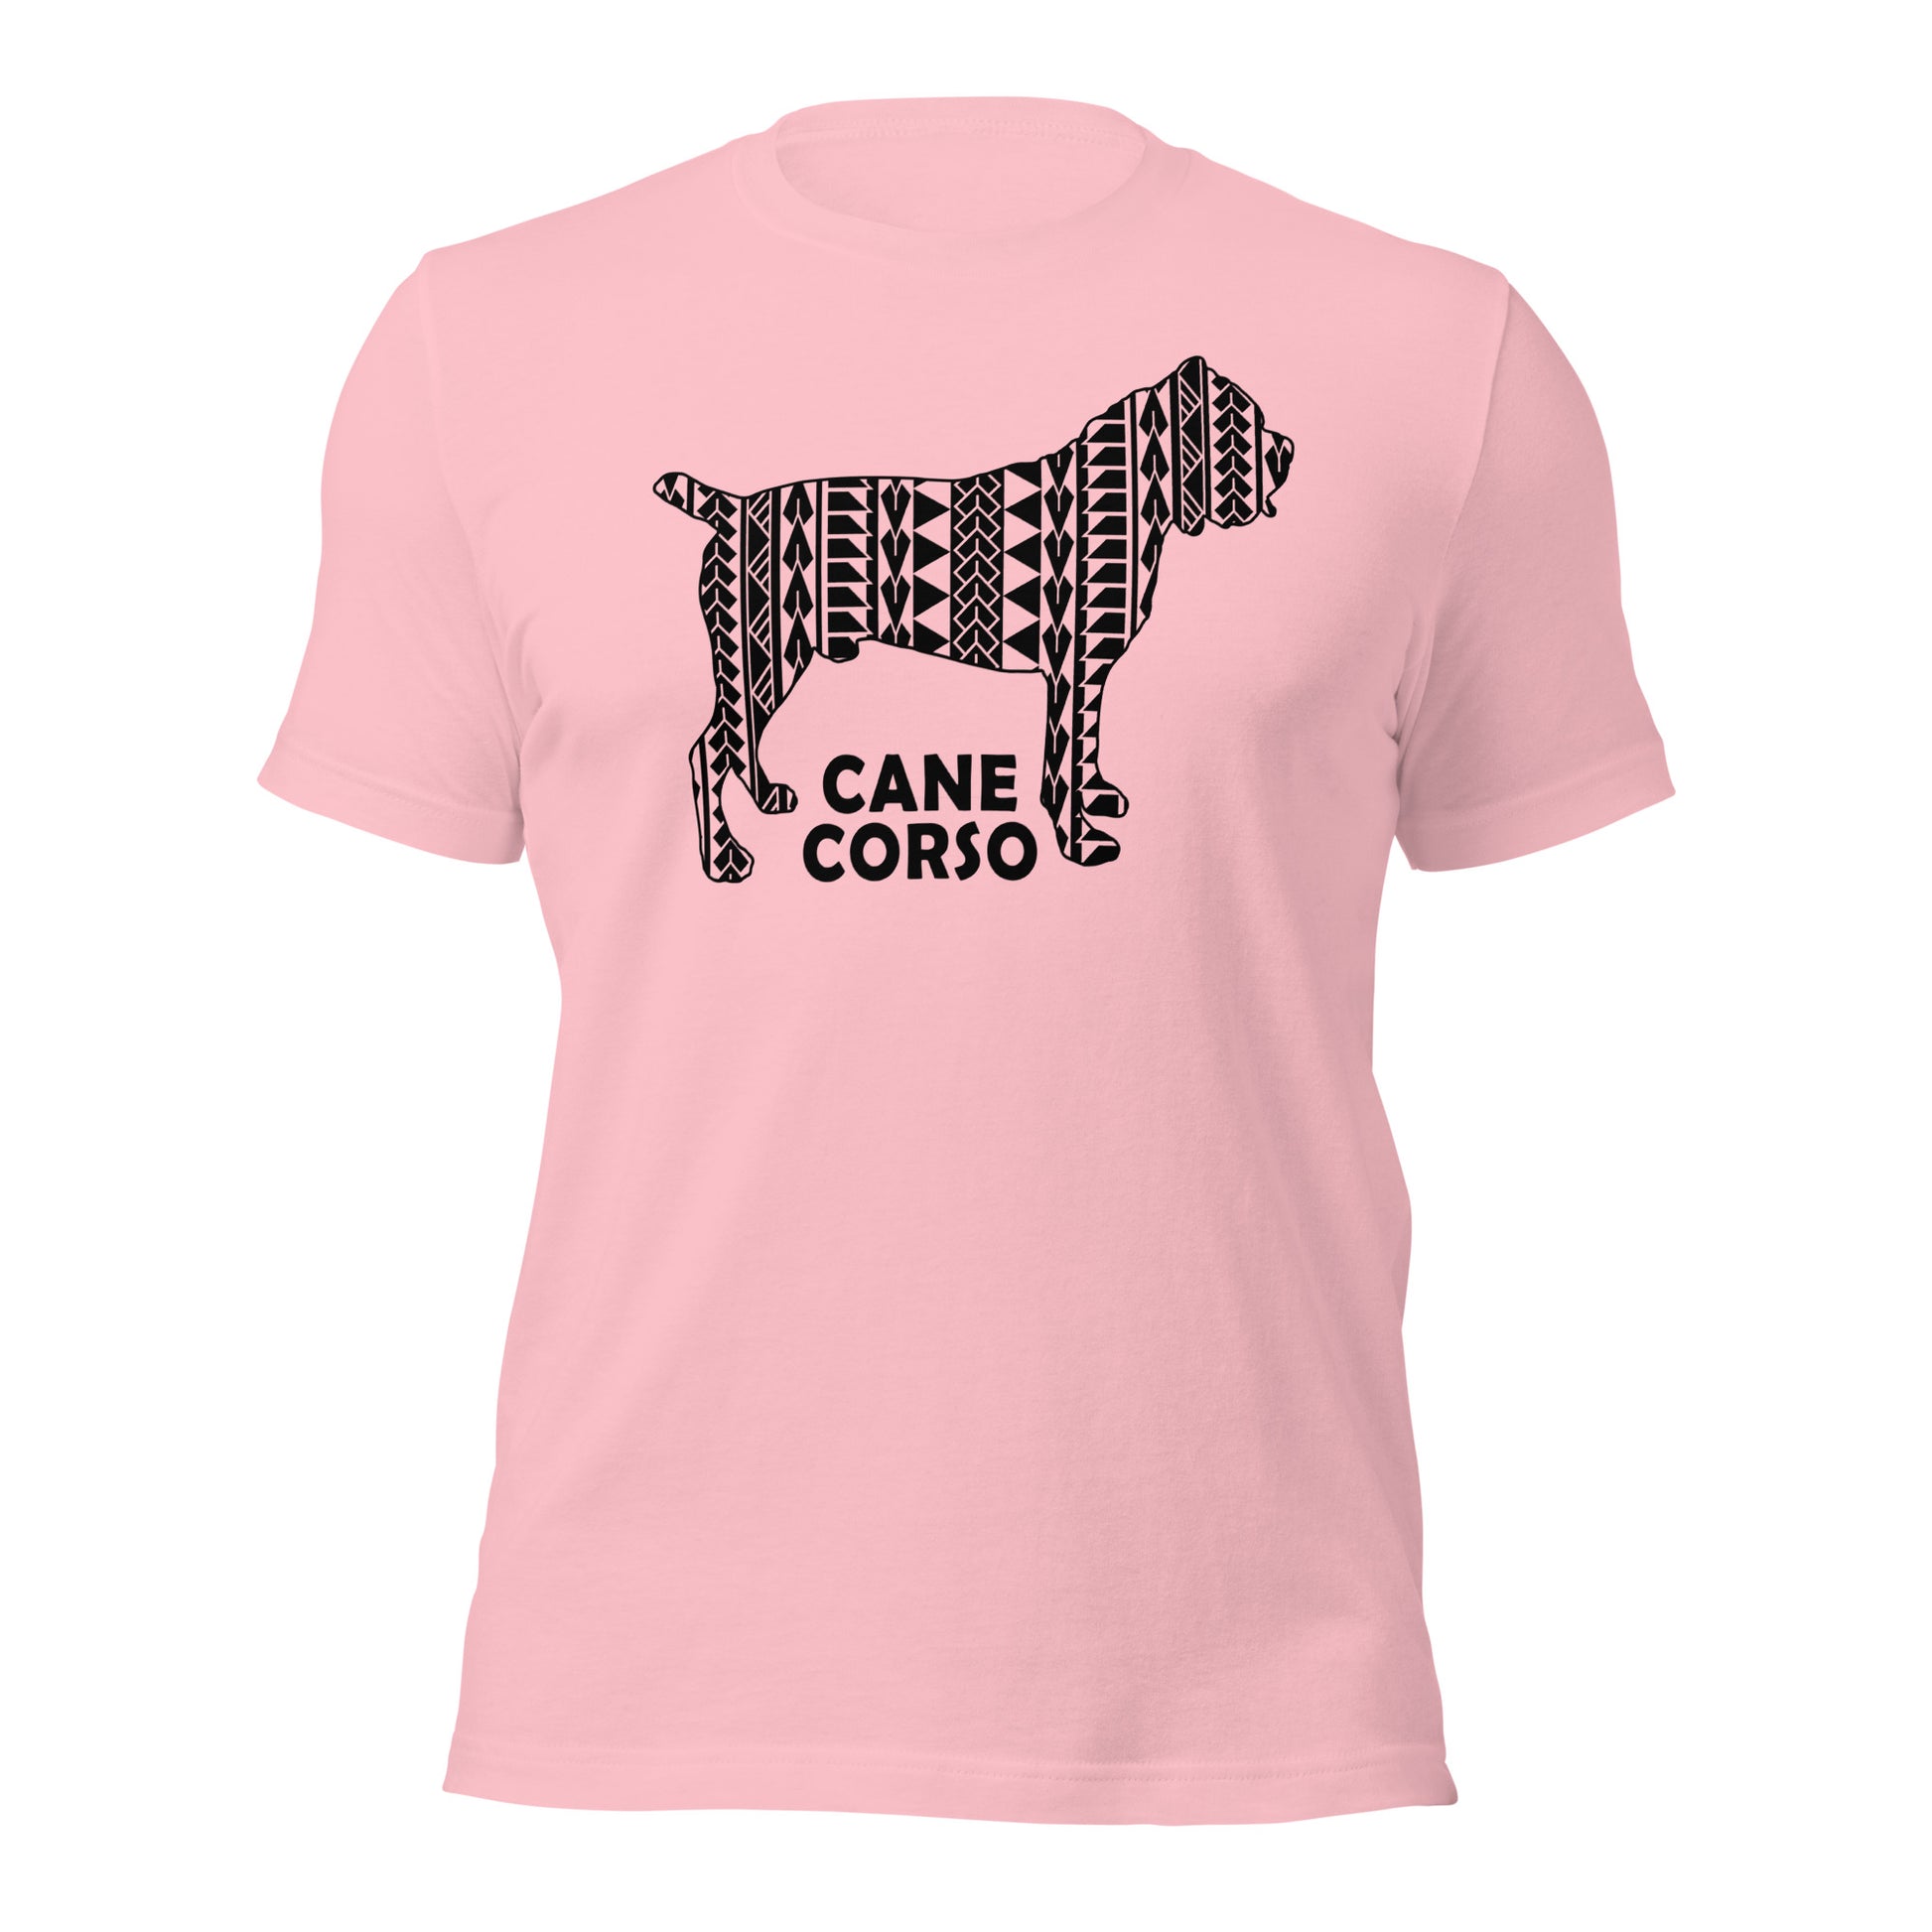 Cane Corso Polynesian t-shirt pink by Dog Artistry.